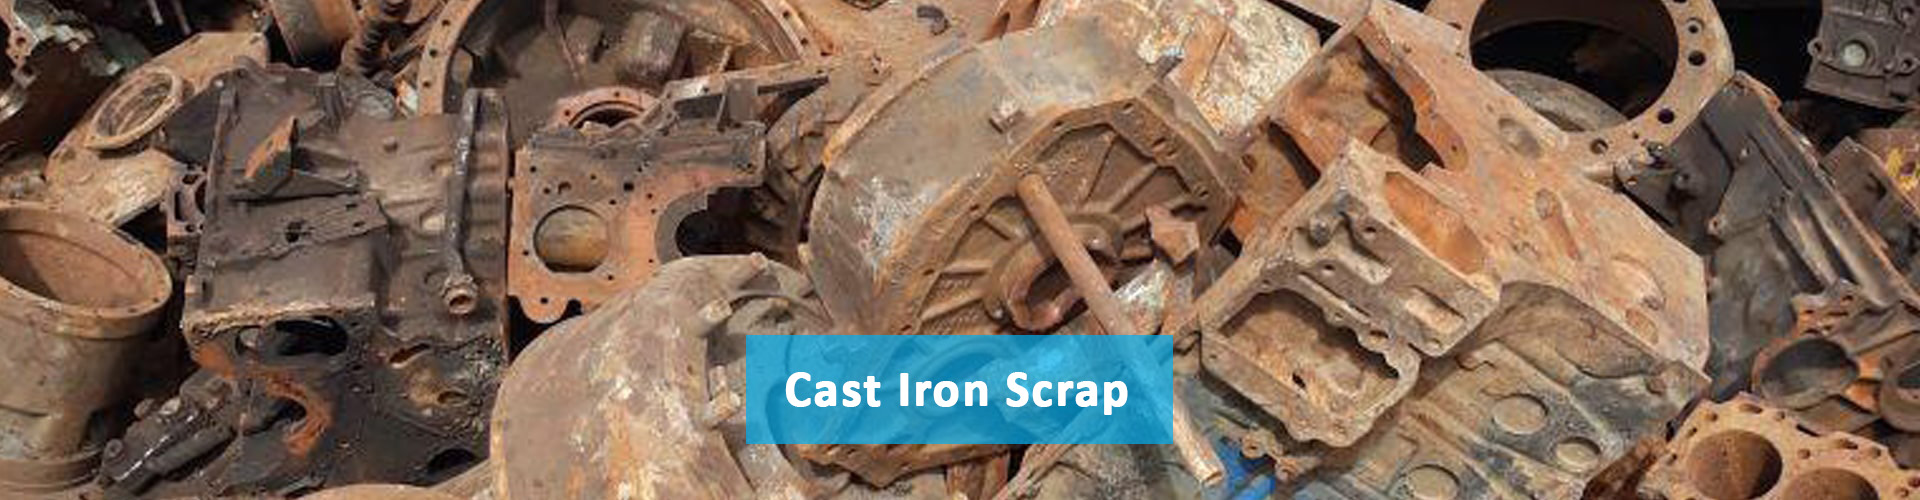 Cast Iron Scrap